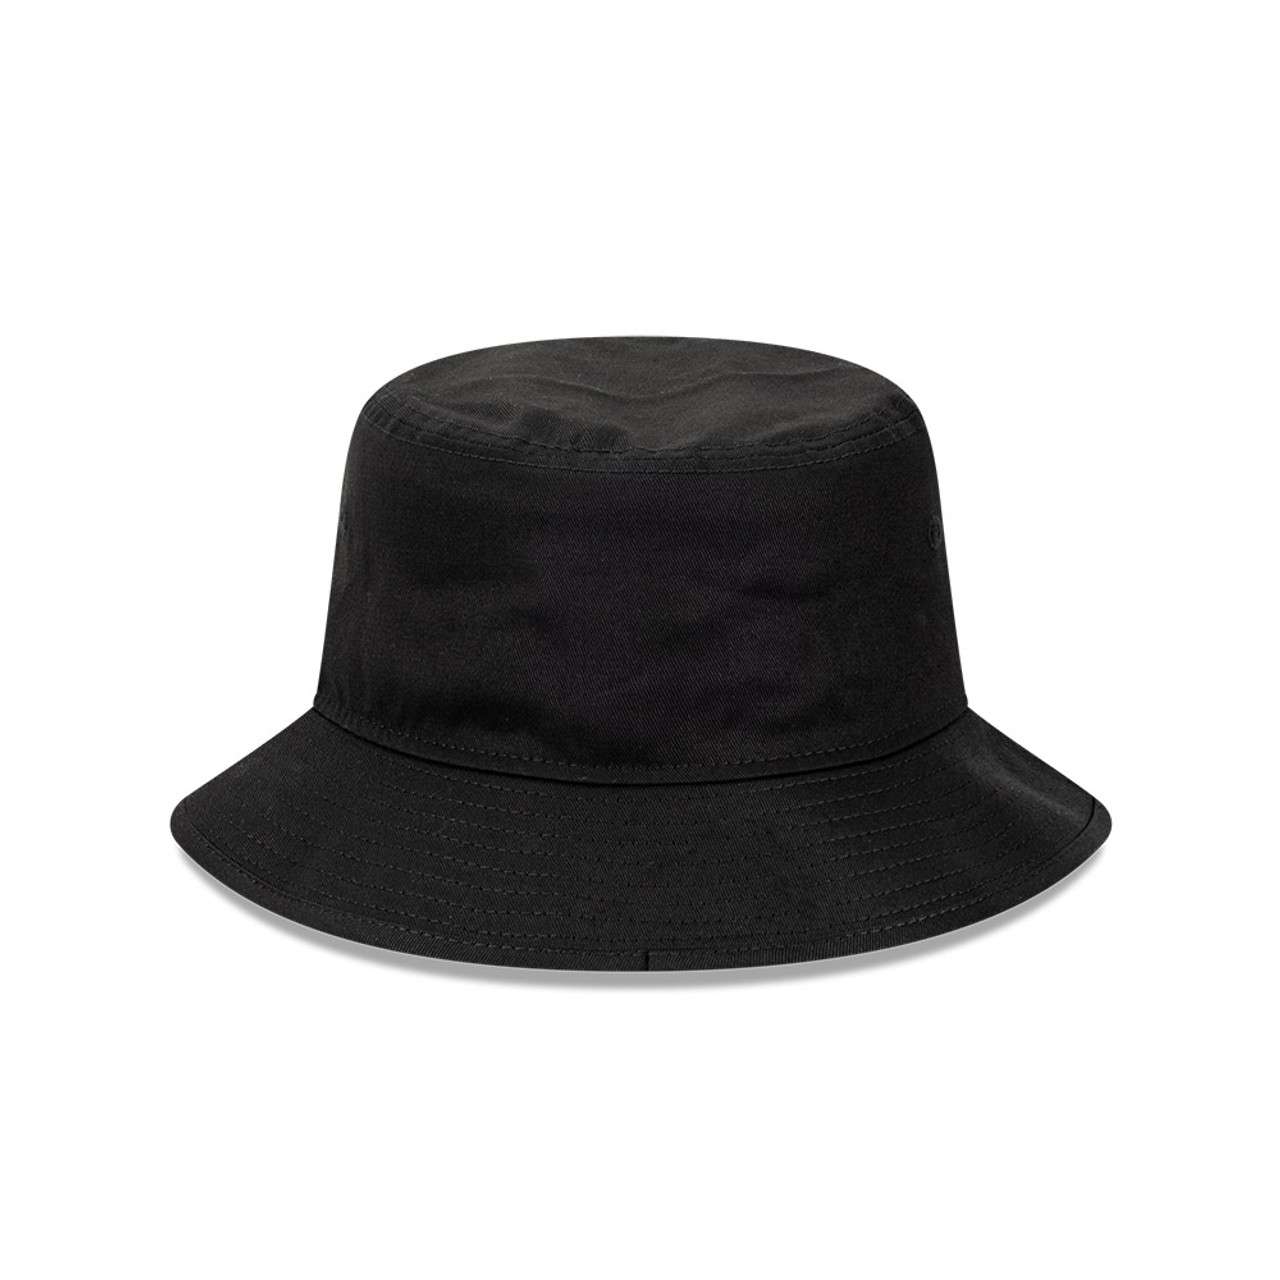 Fremantle Dockers New Era Black on Black Bucket Hat - The Dock ...